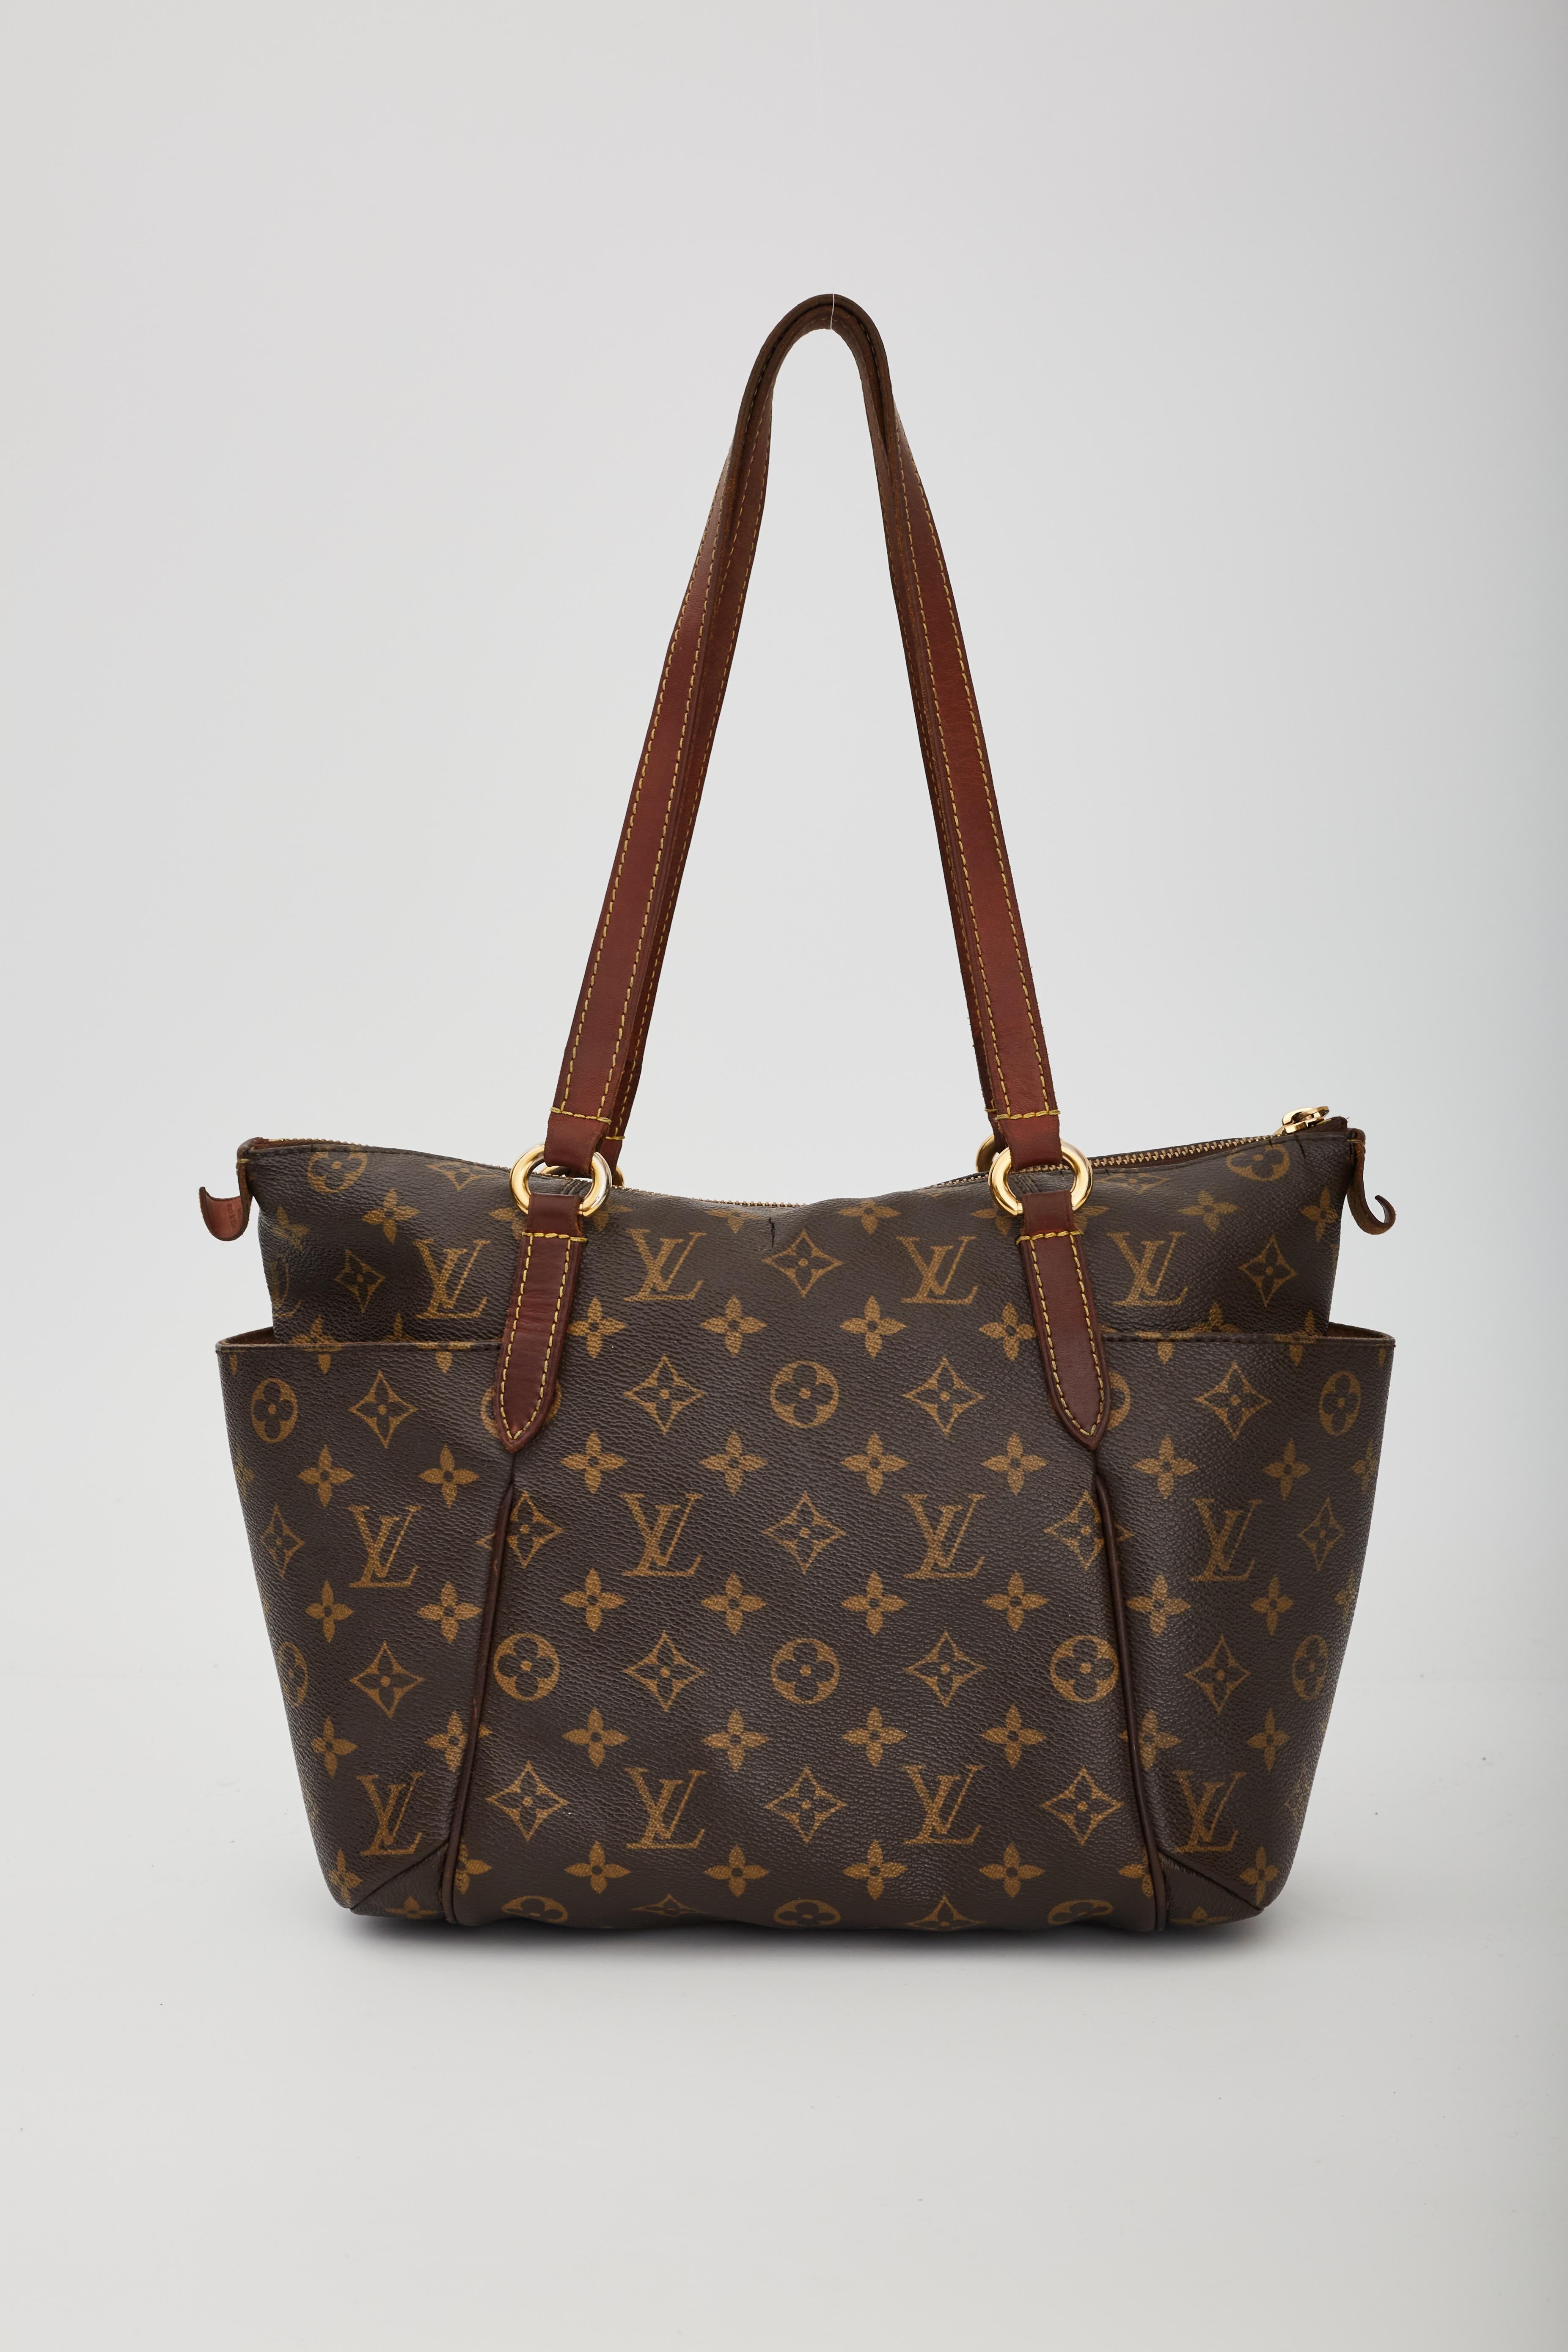 Louis Vuitton Favorite Handbag - 39 For Sale on 1stDibs  favorite handbag  monogram canvas pm, favorite lv bag, louis vuitton favorite pm